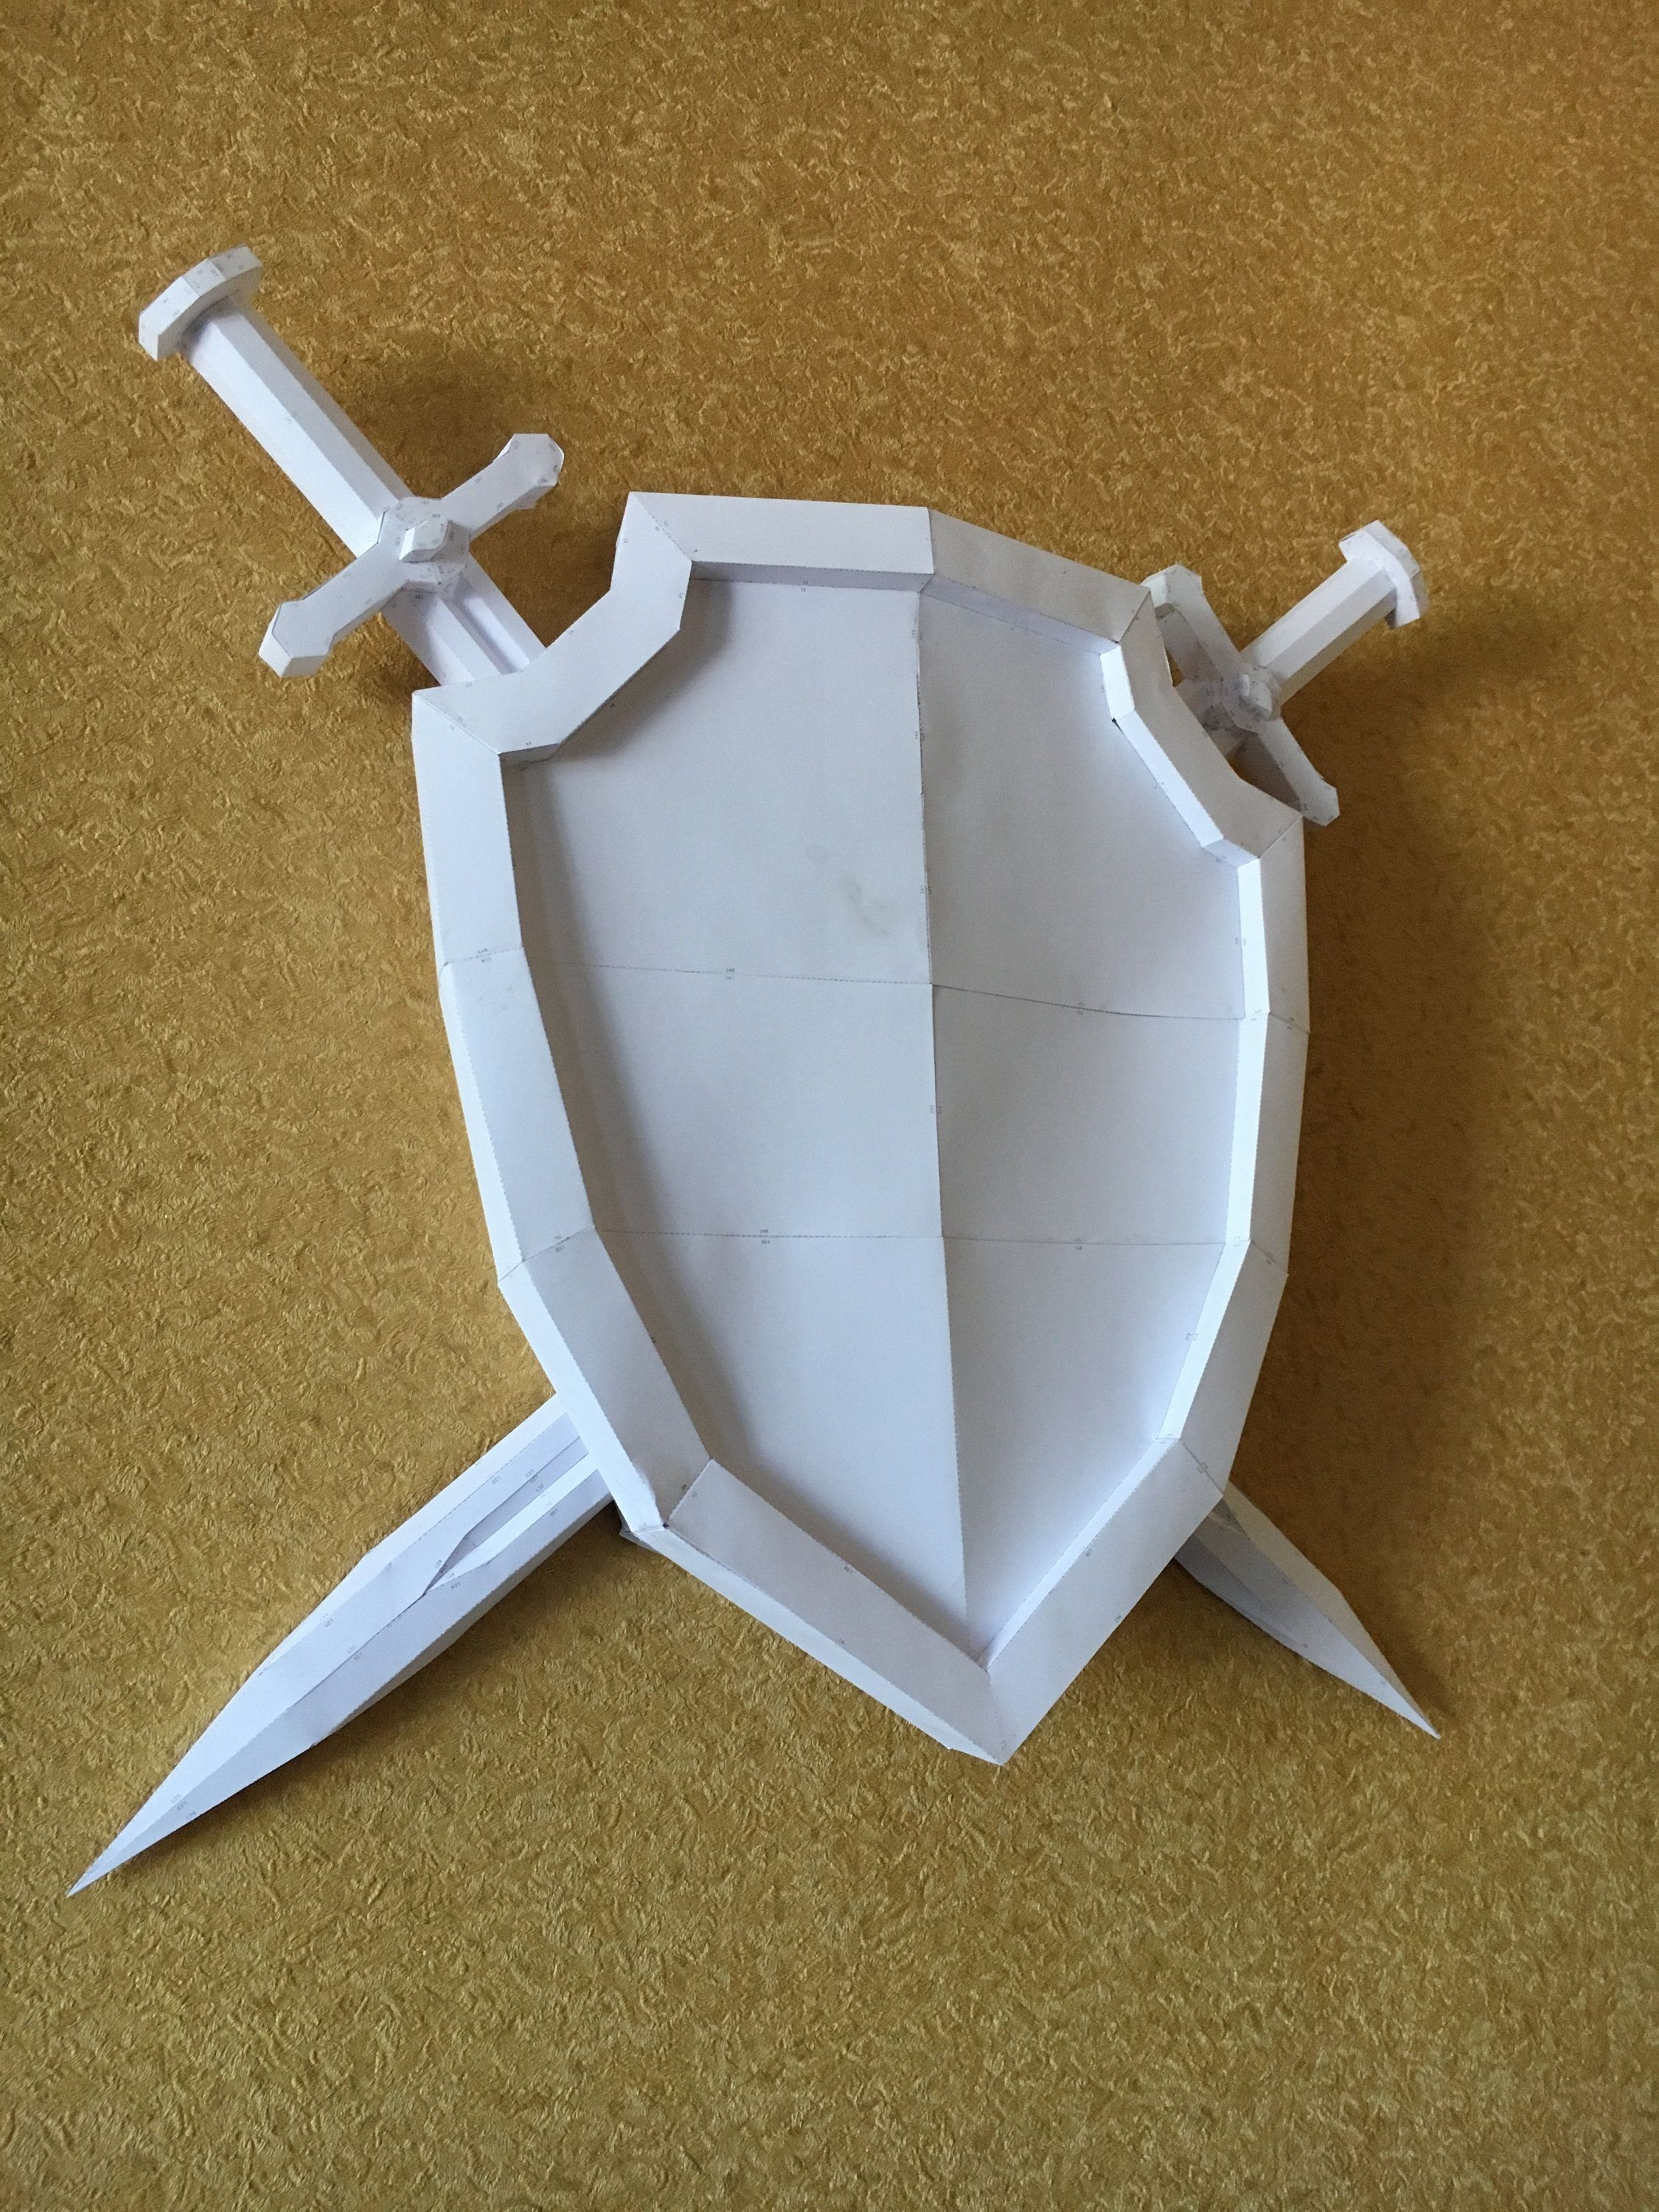 Snake Papercraft Sword Shield Diy Papercraft Model ÐÑÐ¼Ð°Ð¶Ð½ÑÐµ Ð¸Ð·Ð´ÐµÐ Ð¸Ñ